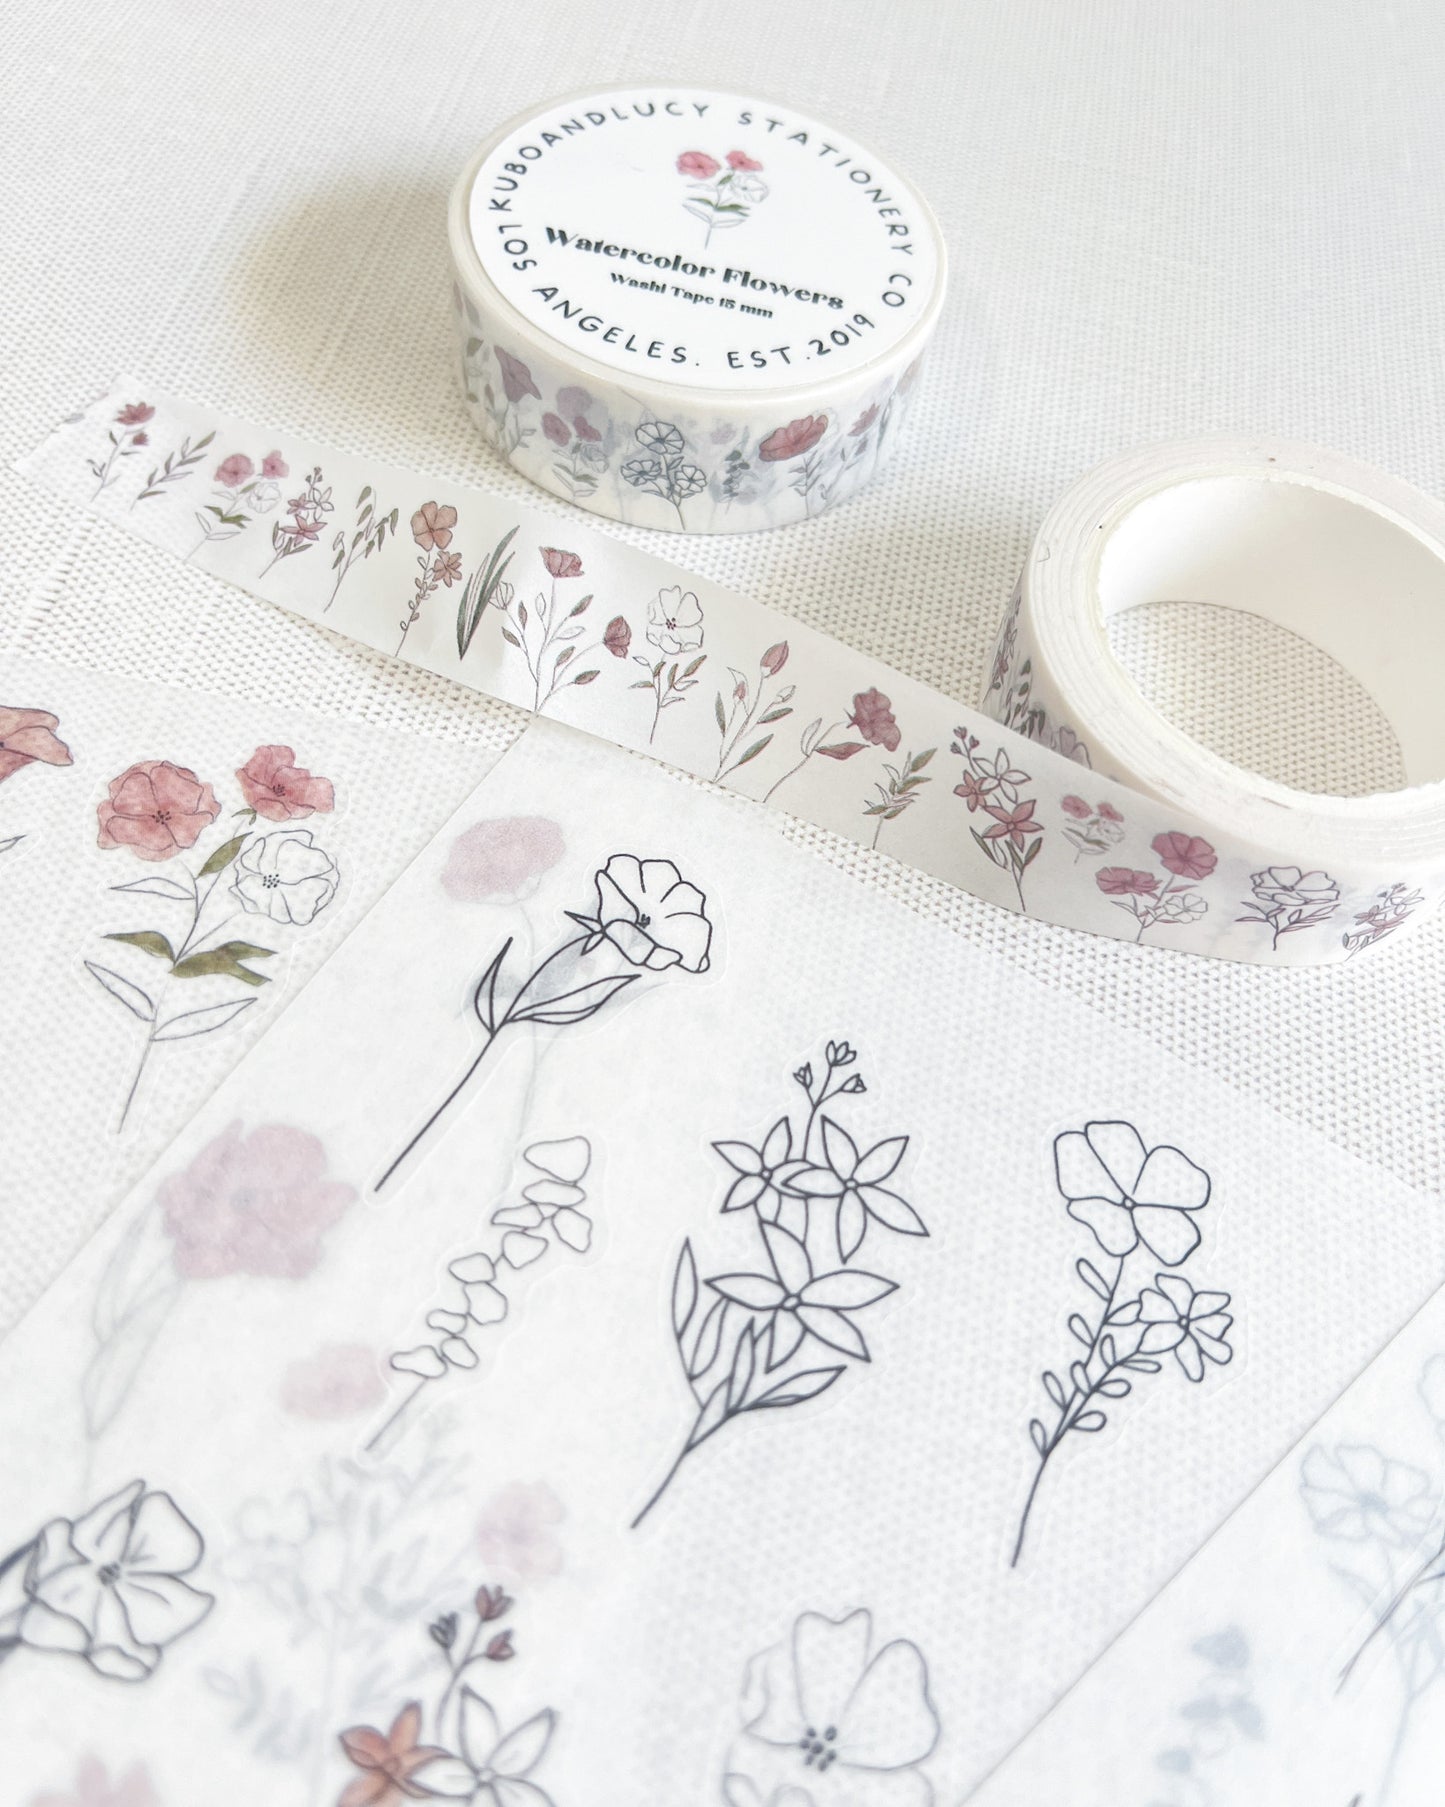 Kuboandlucy Stationery Co | Watercolor Flowers Washi Tape